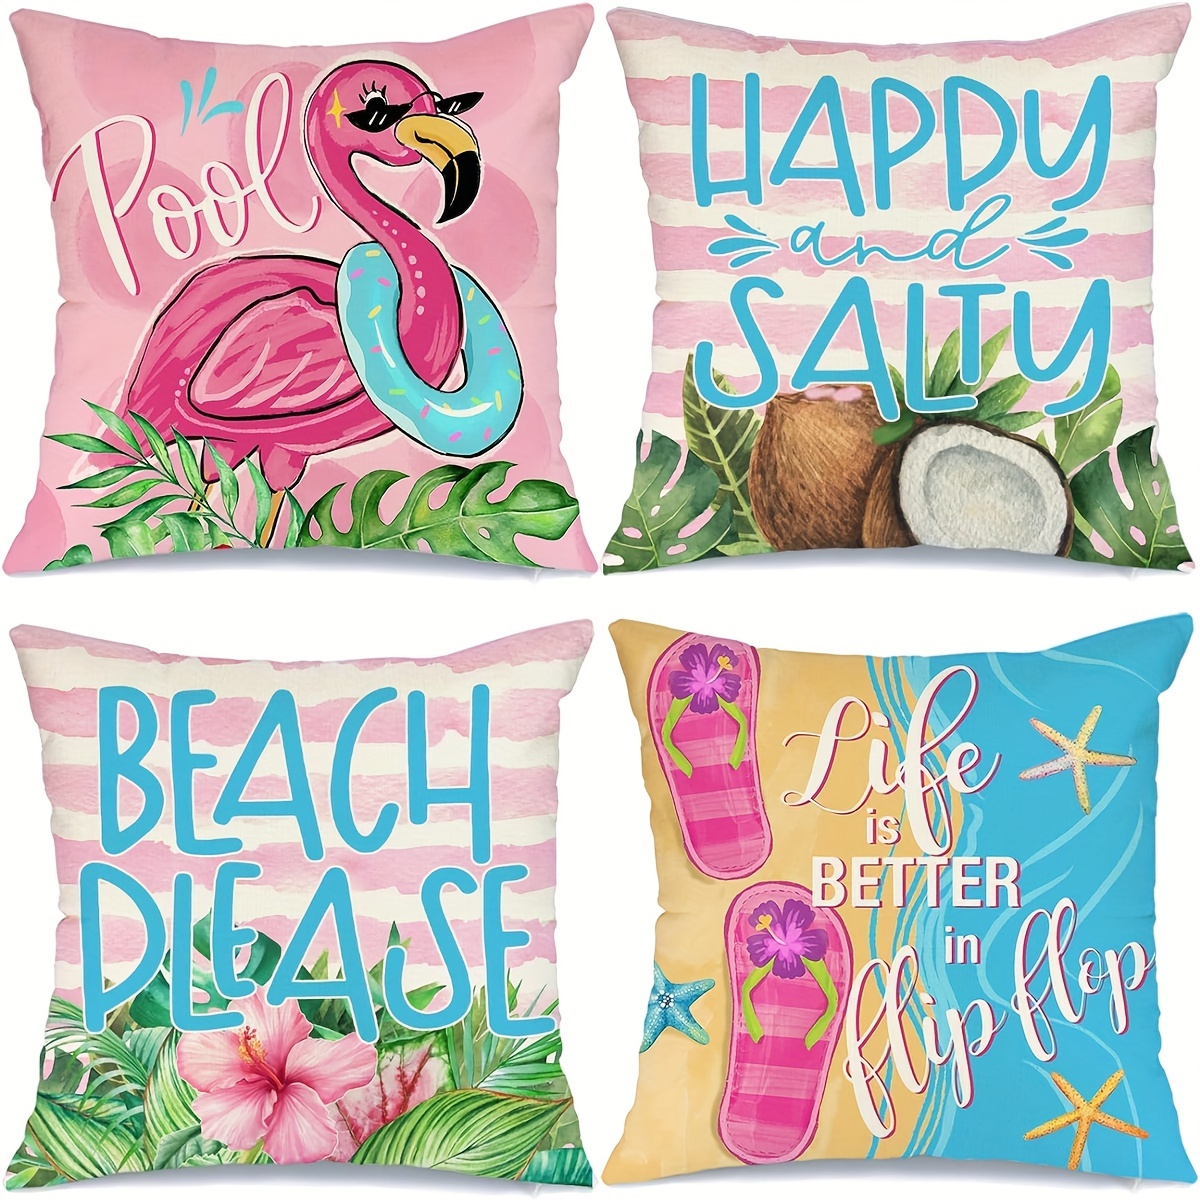 

Set Of 4 Summer Pillowcases, 18 X 18 Inches, Beach, Joy And Savory, Summer Decorative Pillows, Farm Decor, Sofa Cushion Covers